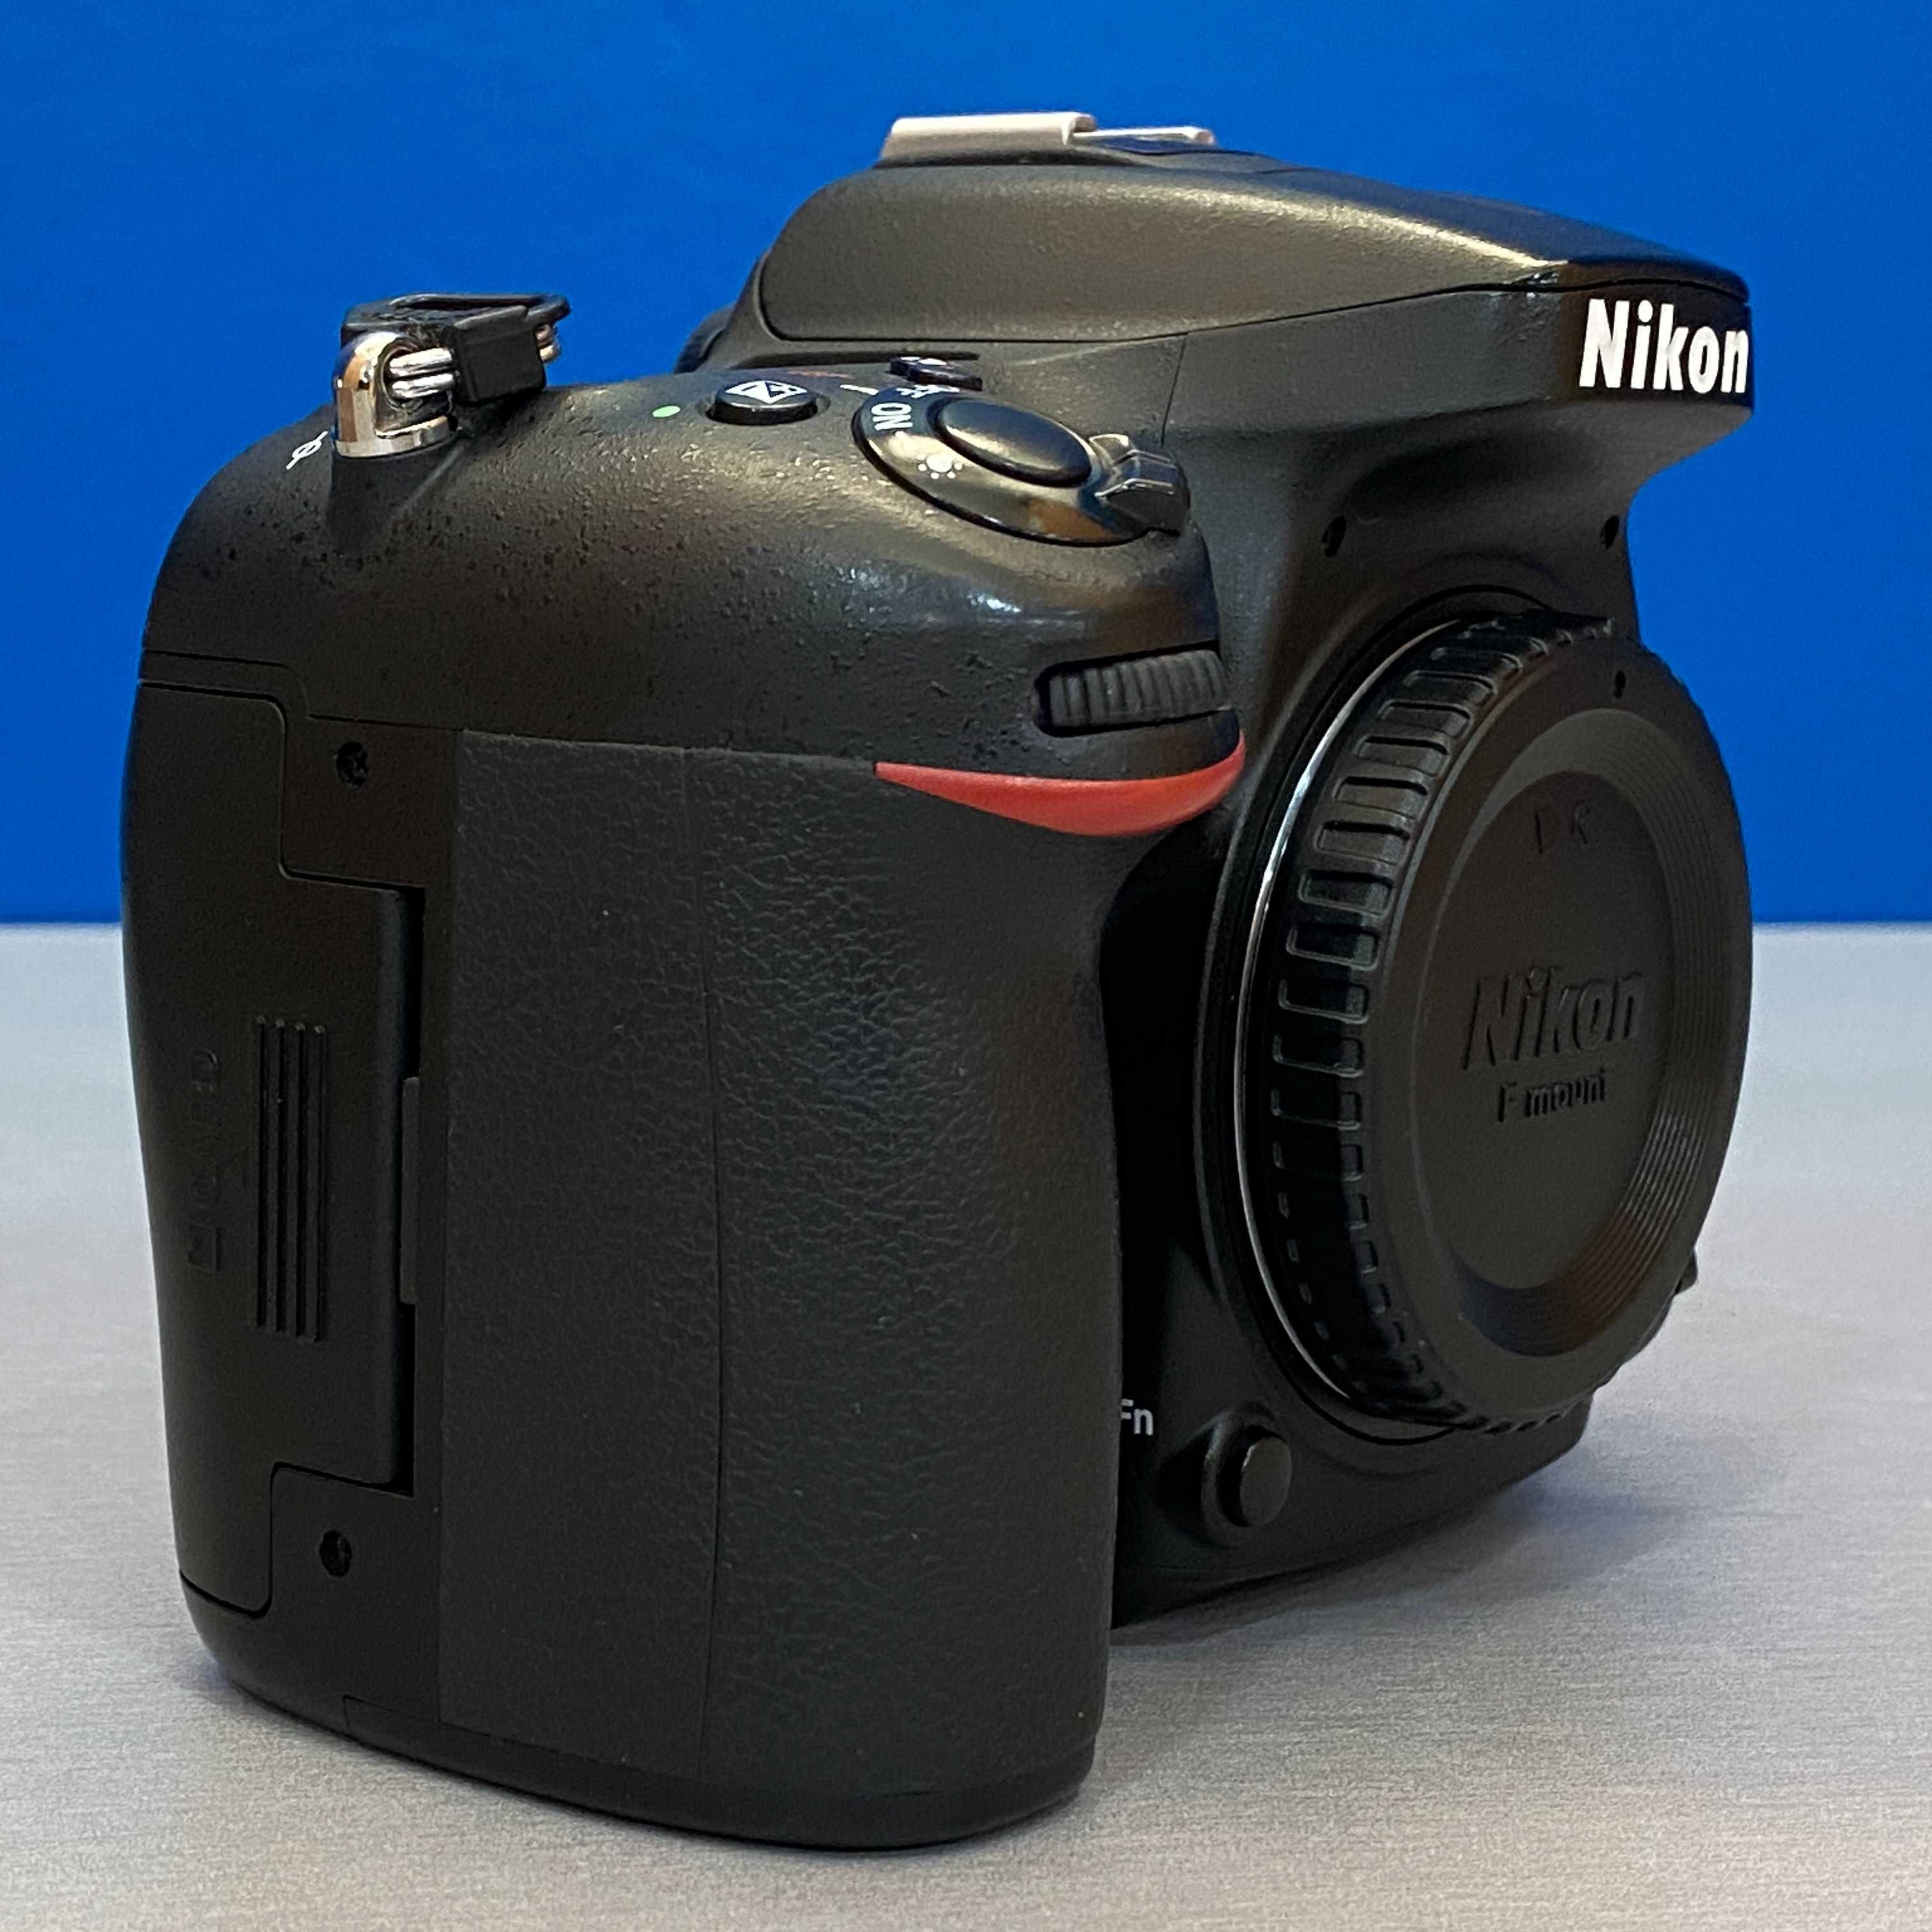 Nikon D7100 (Corpo) - 24.1MP